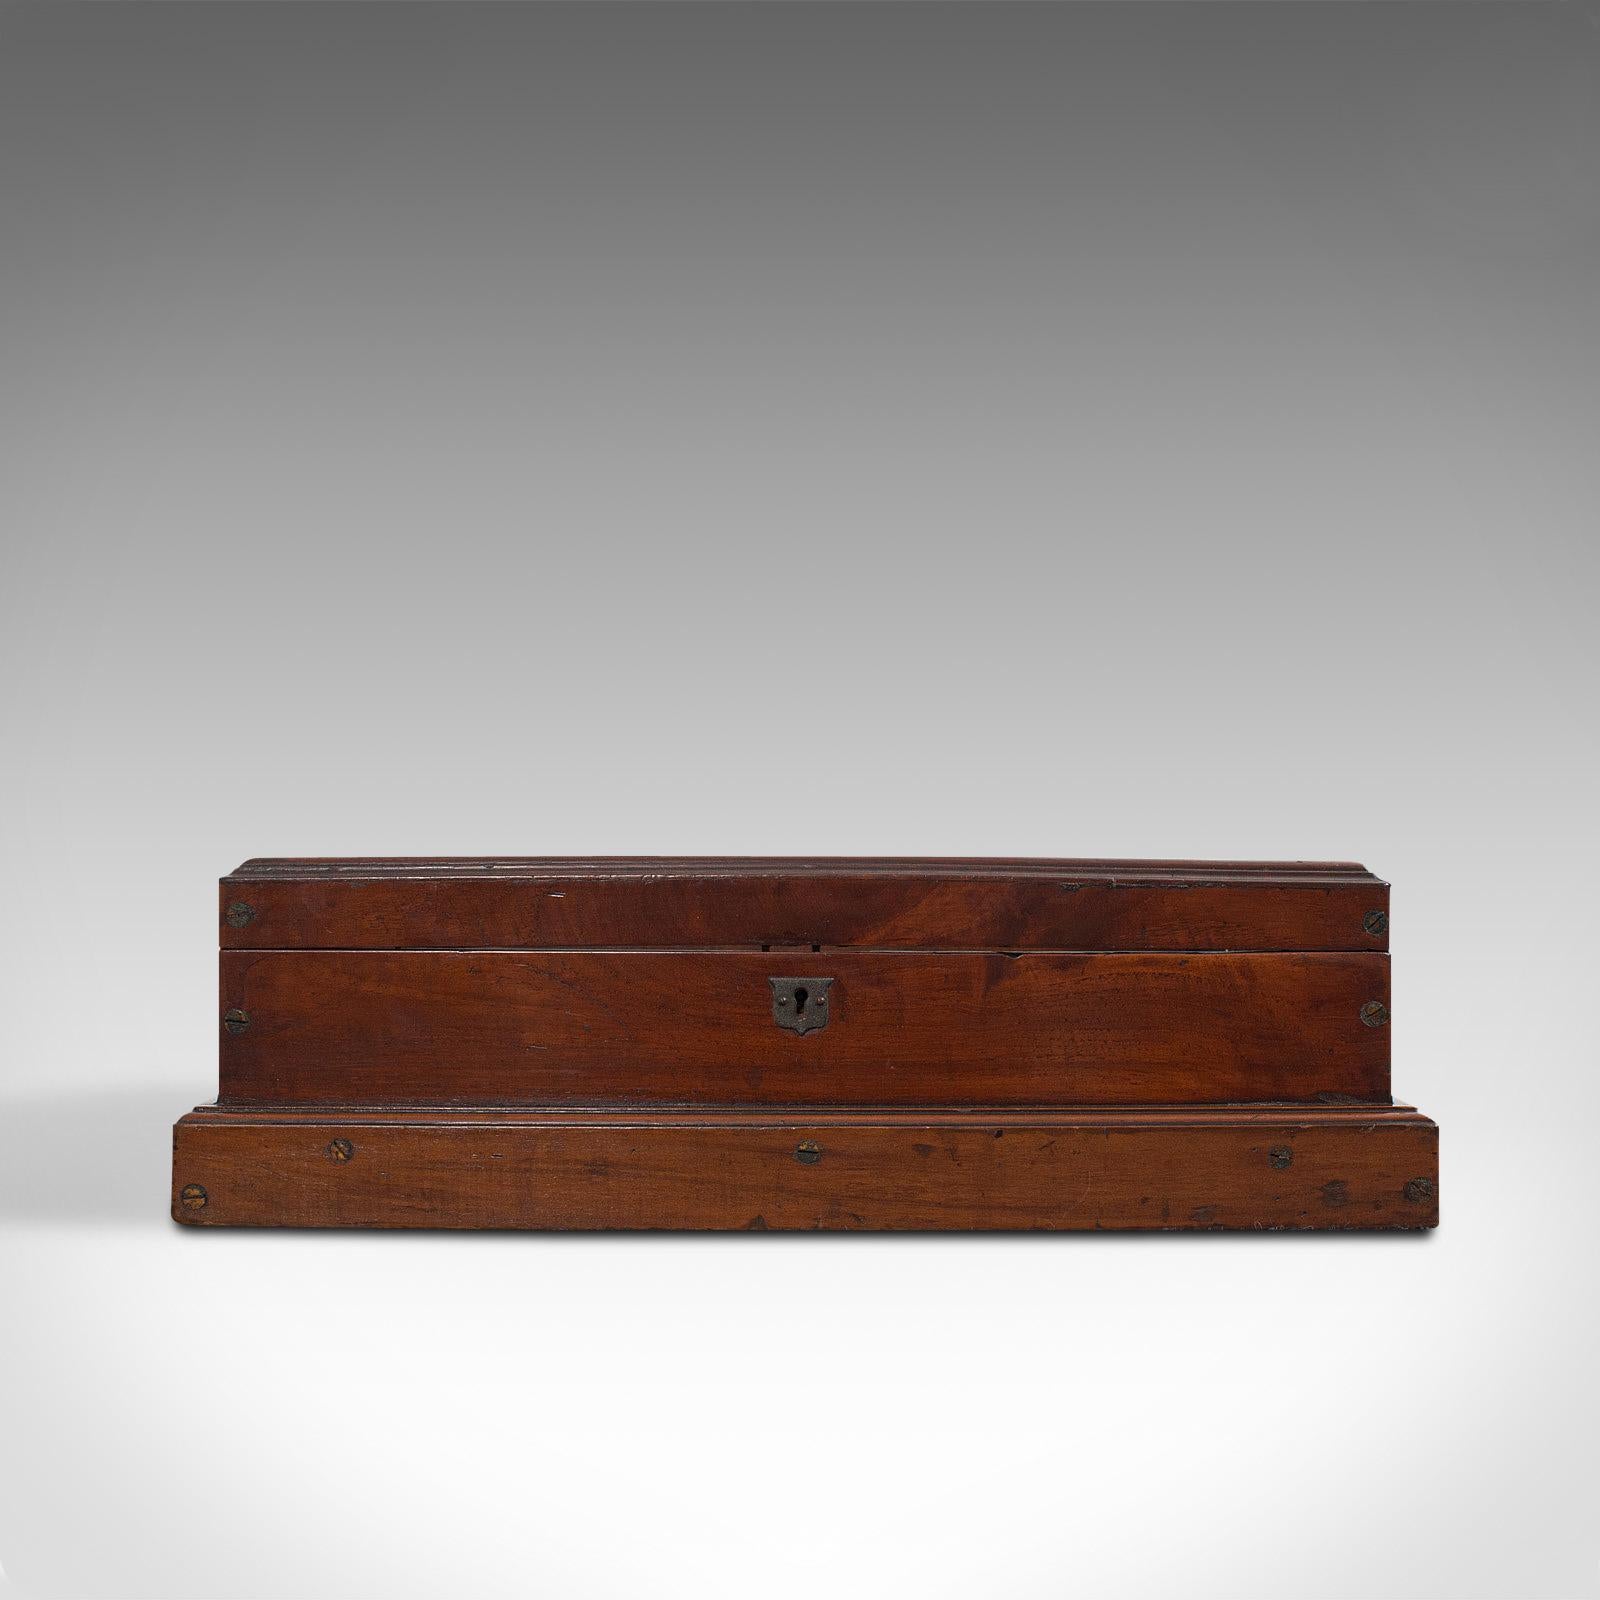 British Antique Shop's Countertop Bijouterie Case, Walnut, Display Cabinet, Victorian